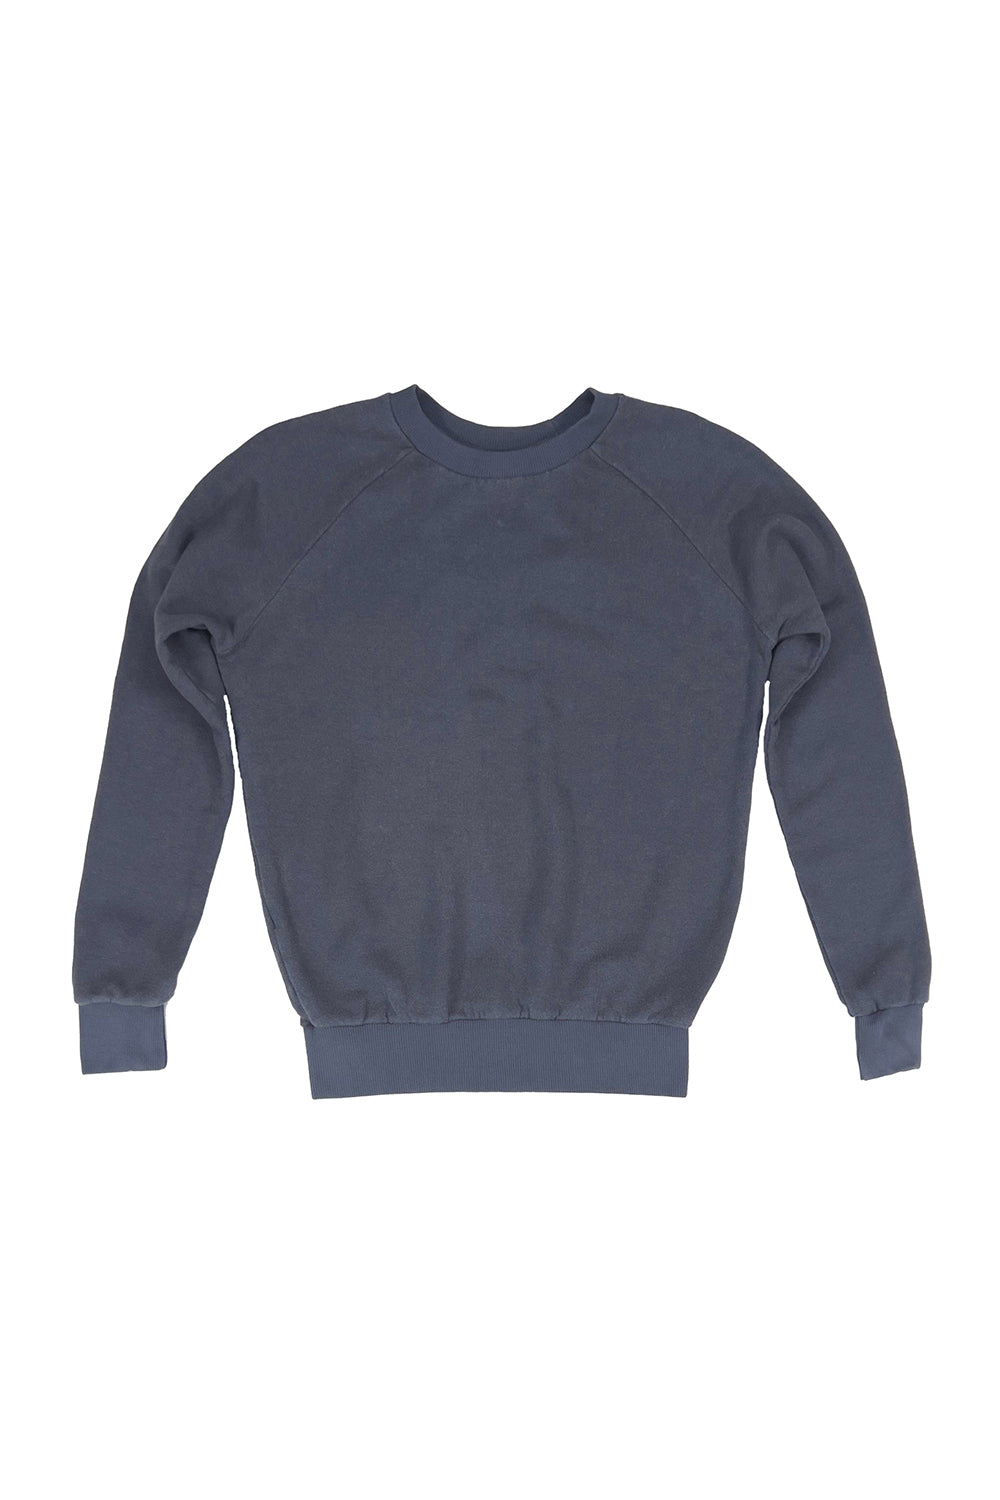 Alpine Raglan | Jungmaven Hemp Clothing & Accessories / Color: Diesel Gray